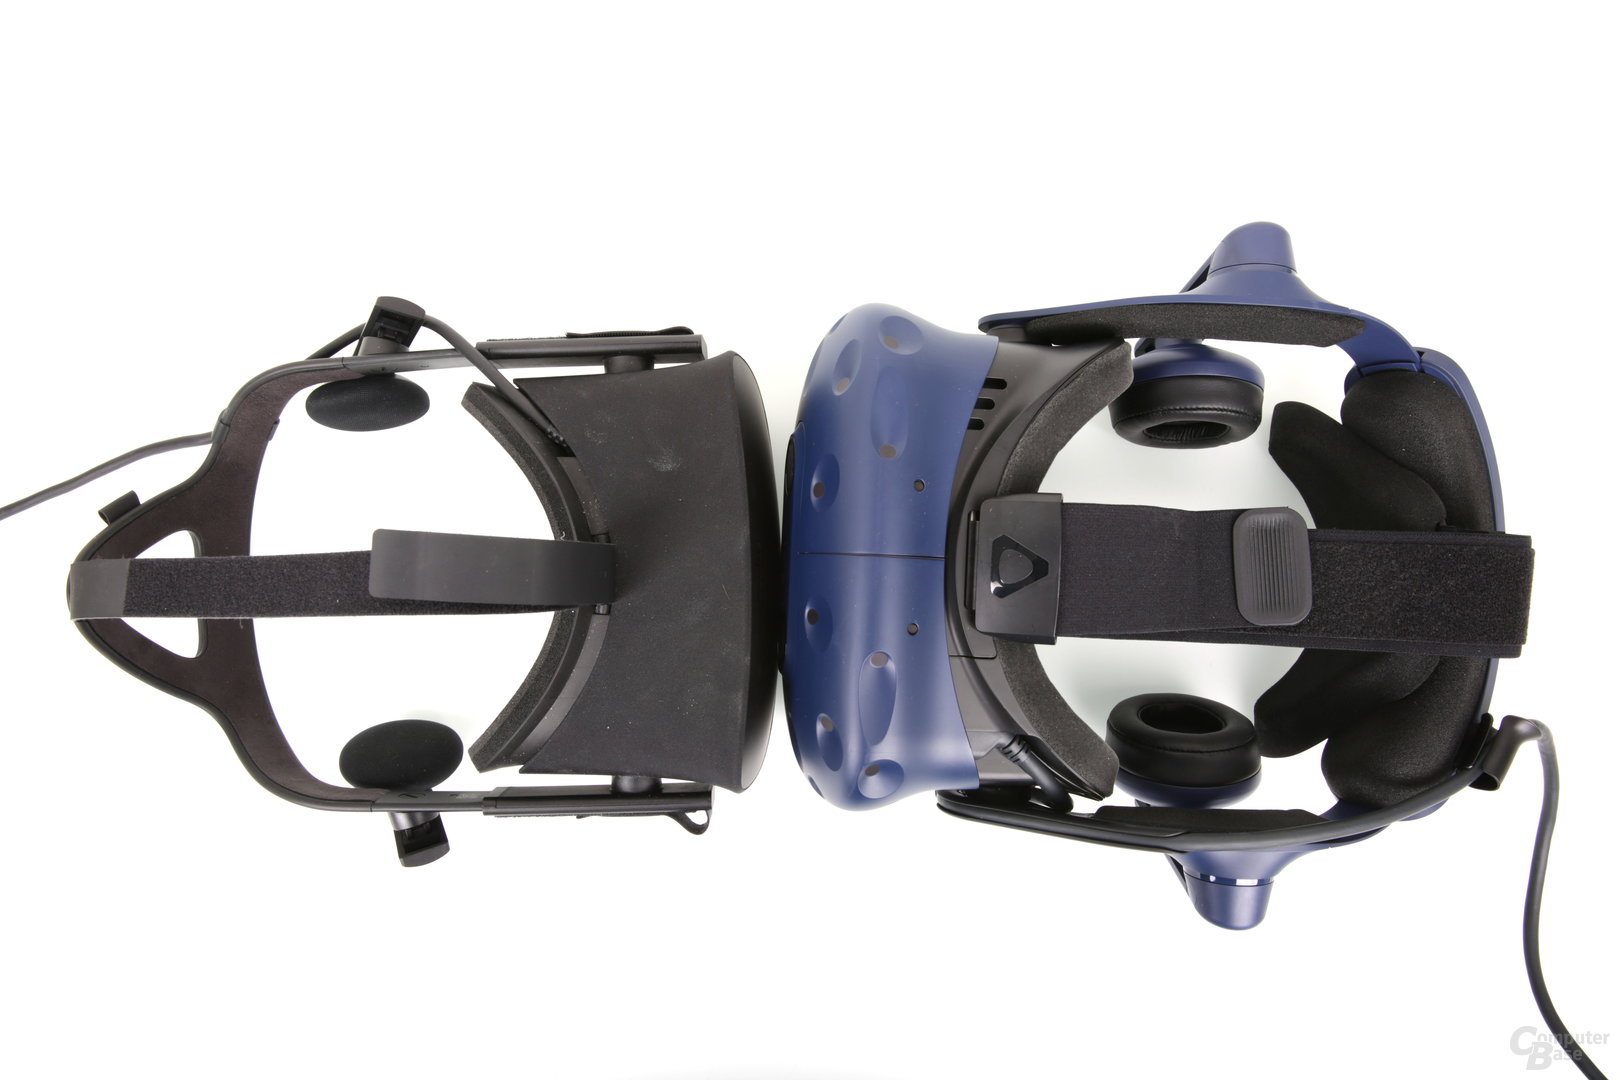 Oculus Rift vs. HTC Vive Pro